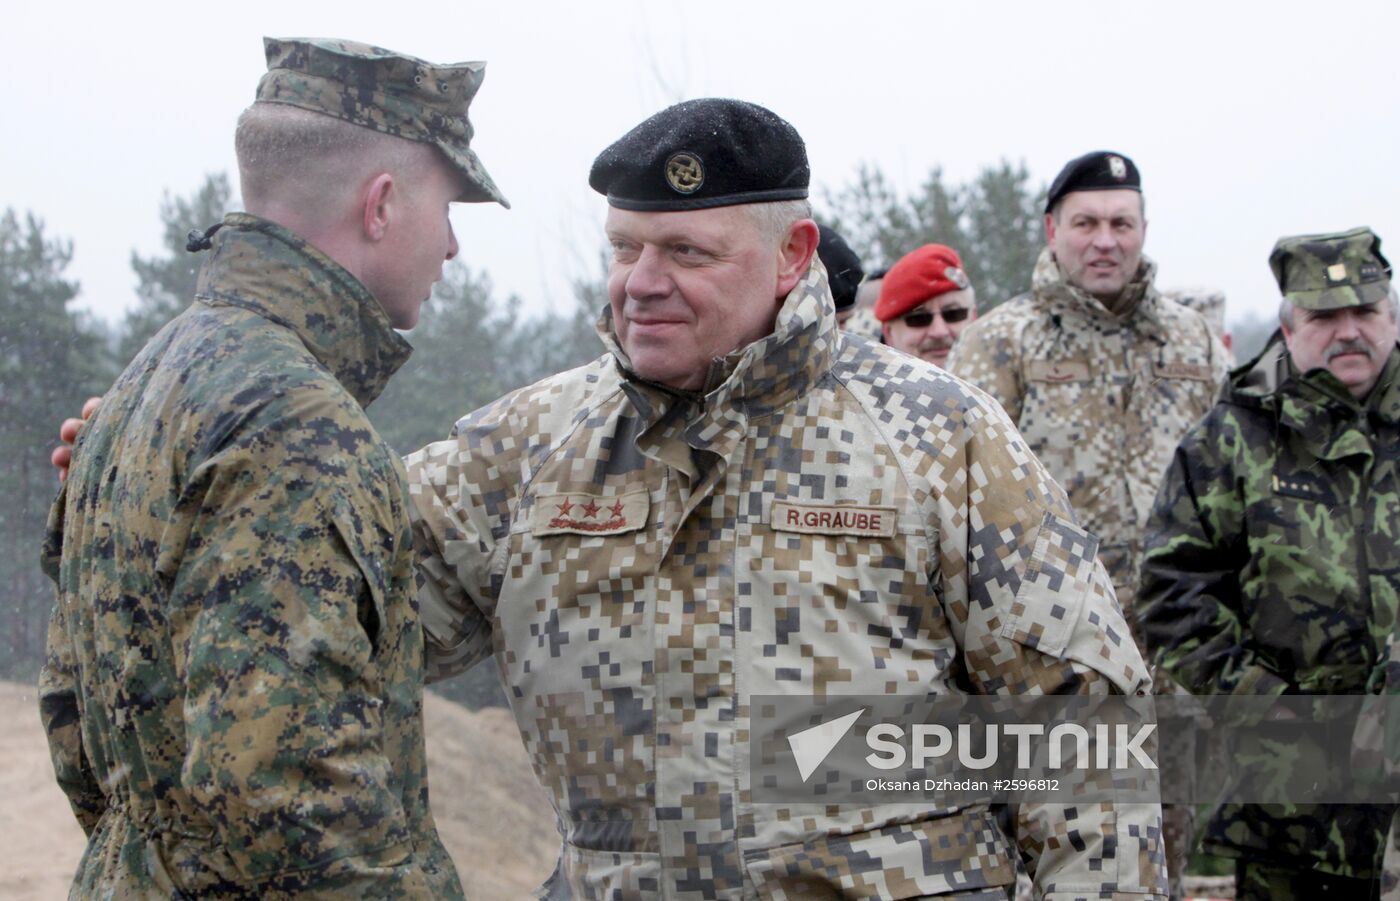 NATO's Operation Summer Shield drill at Adazi military camp in Latvia